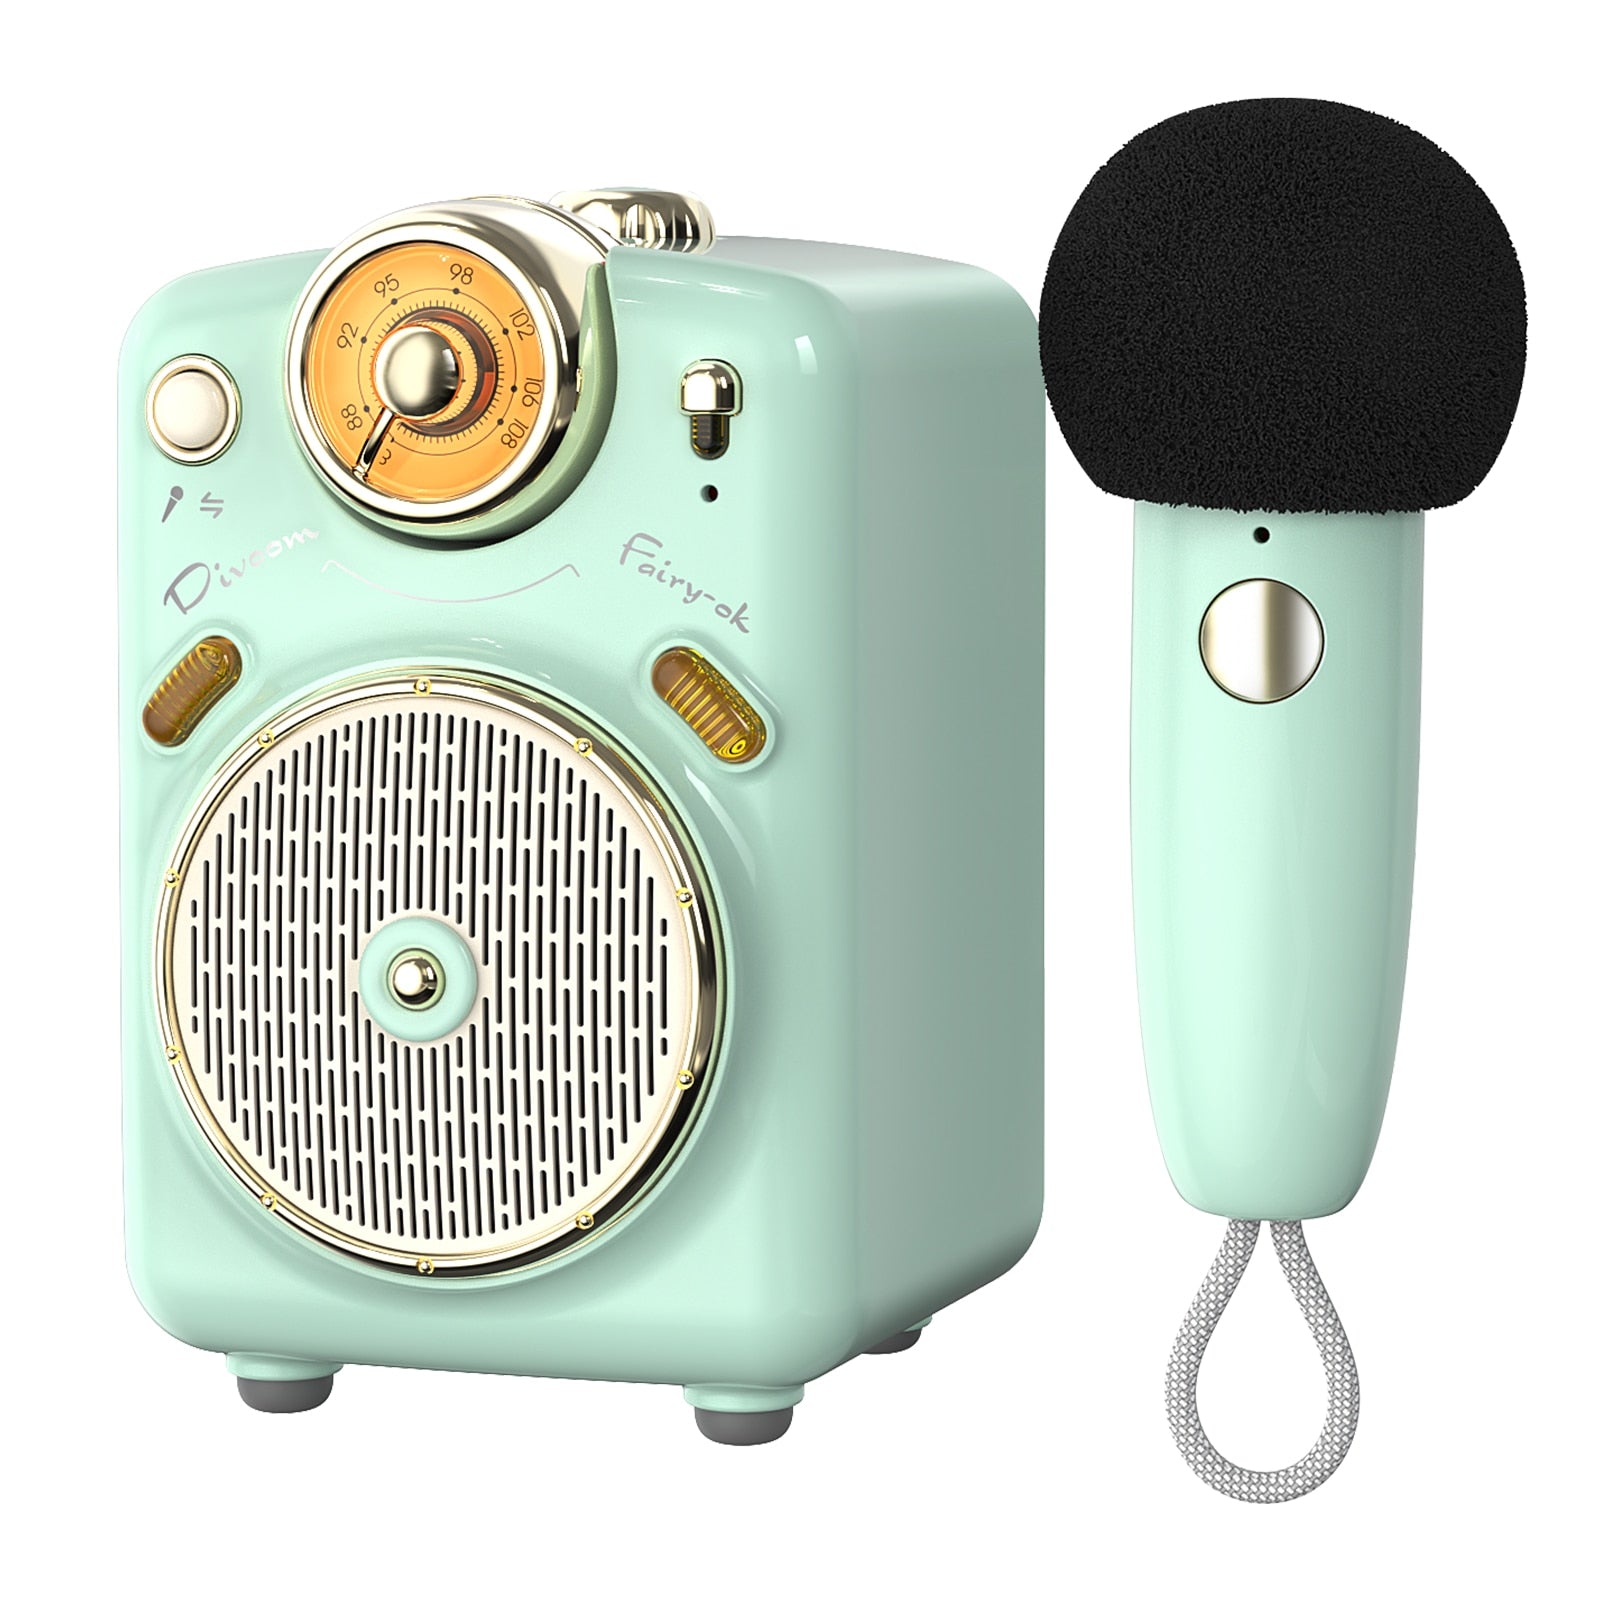 Divoom Fairy-OK Karaoke Speaker - Portable and Fun Audio